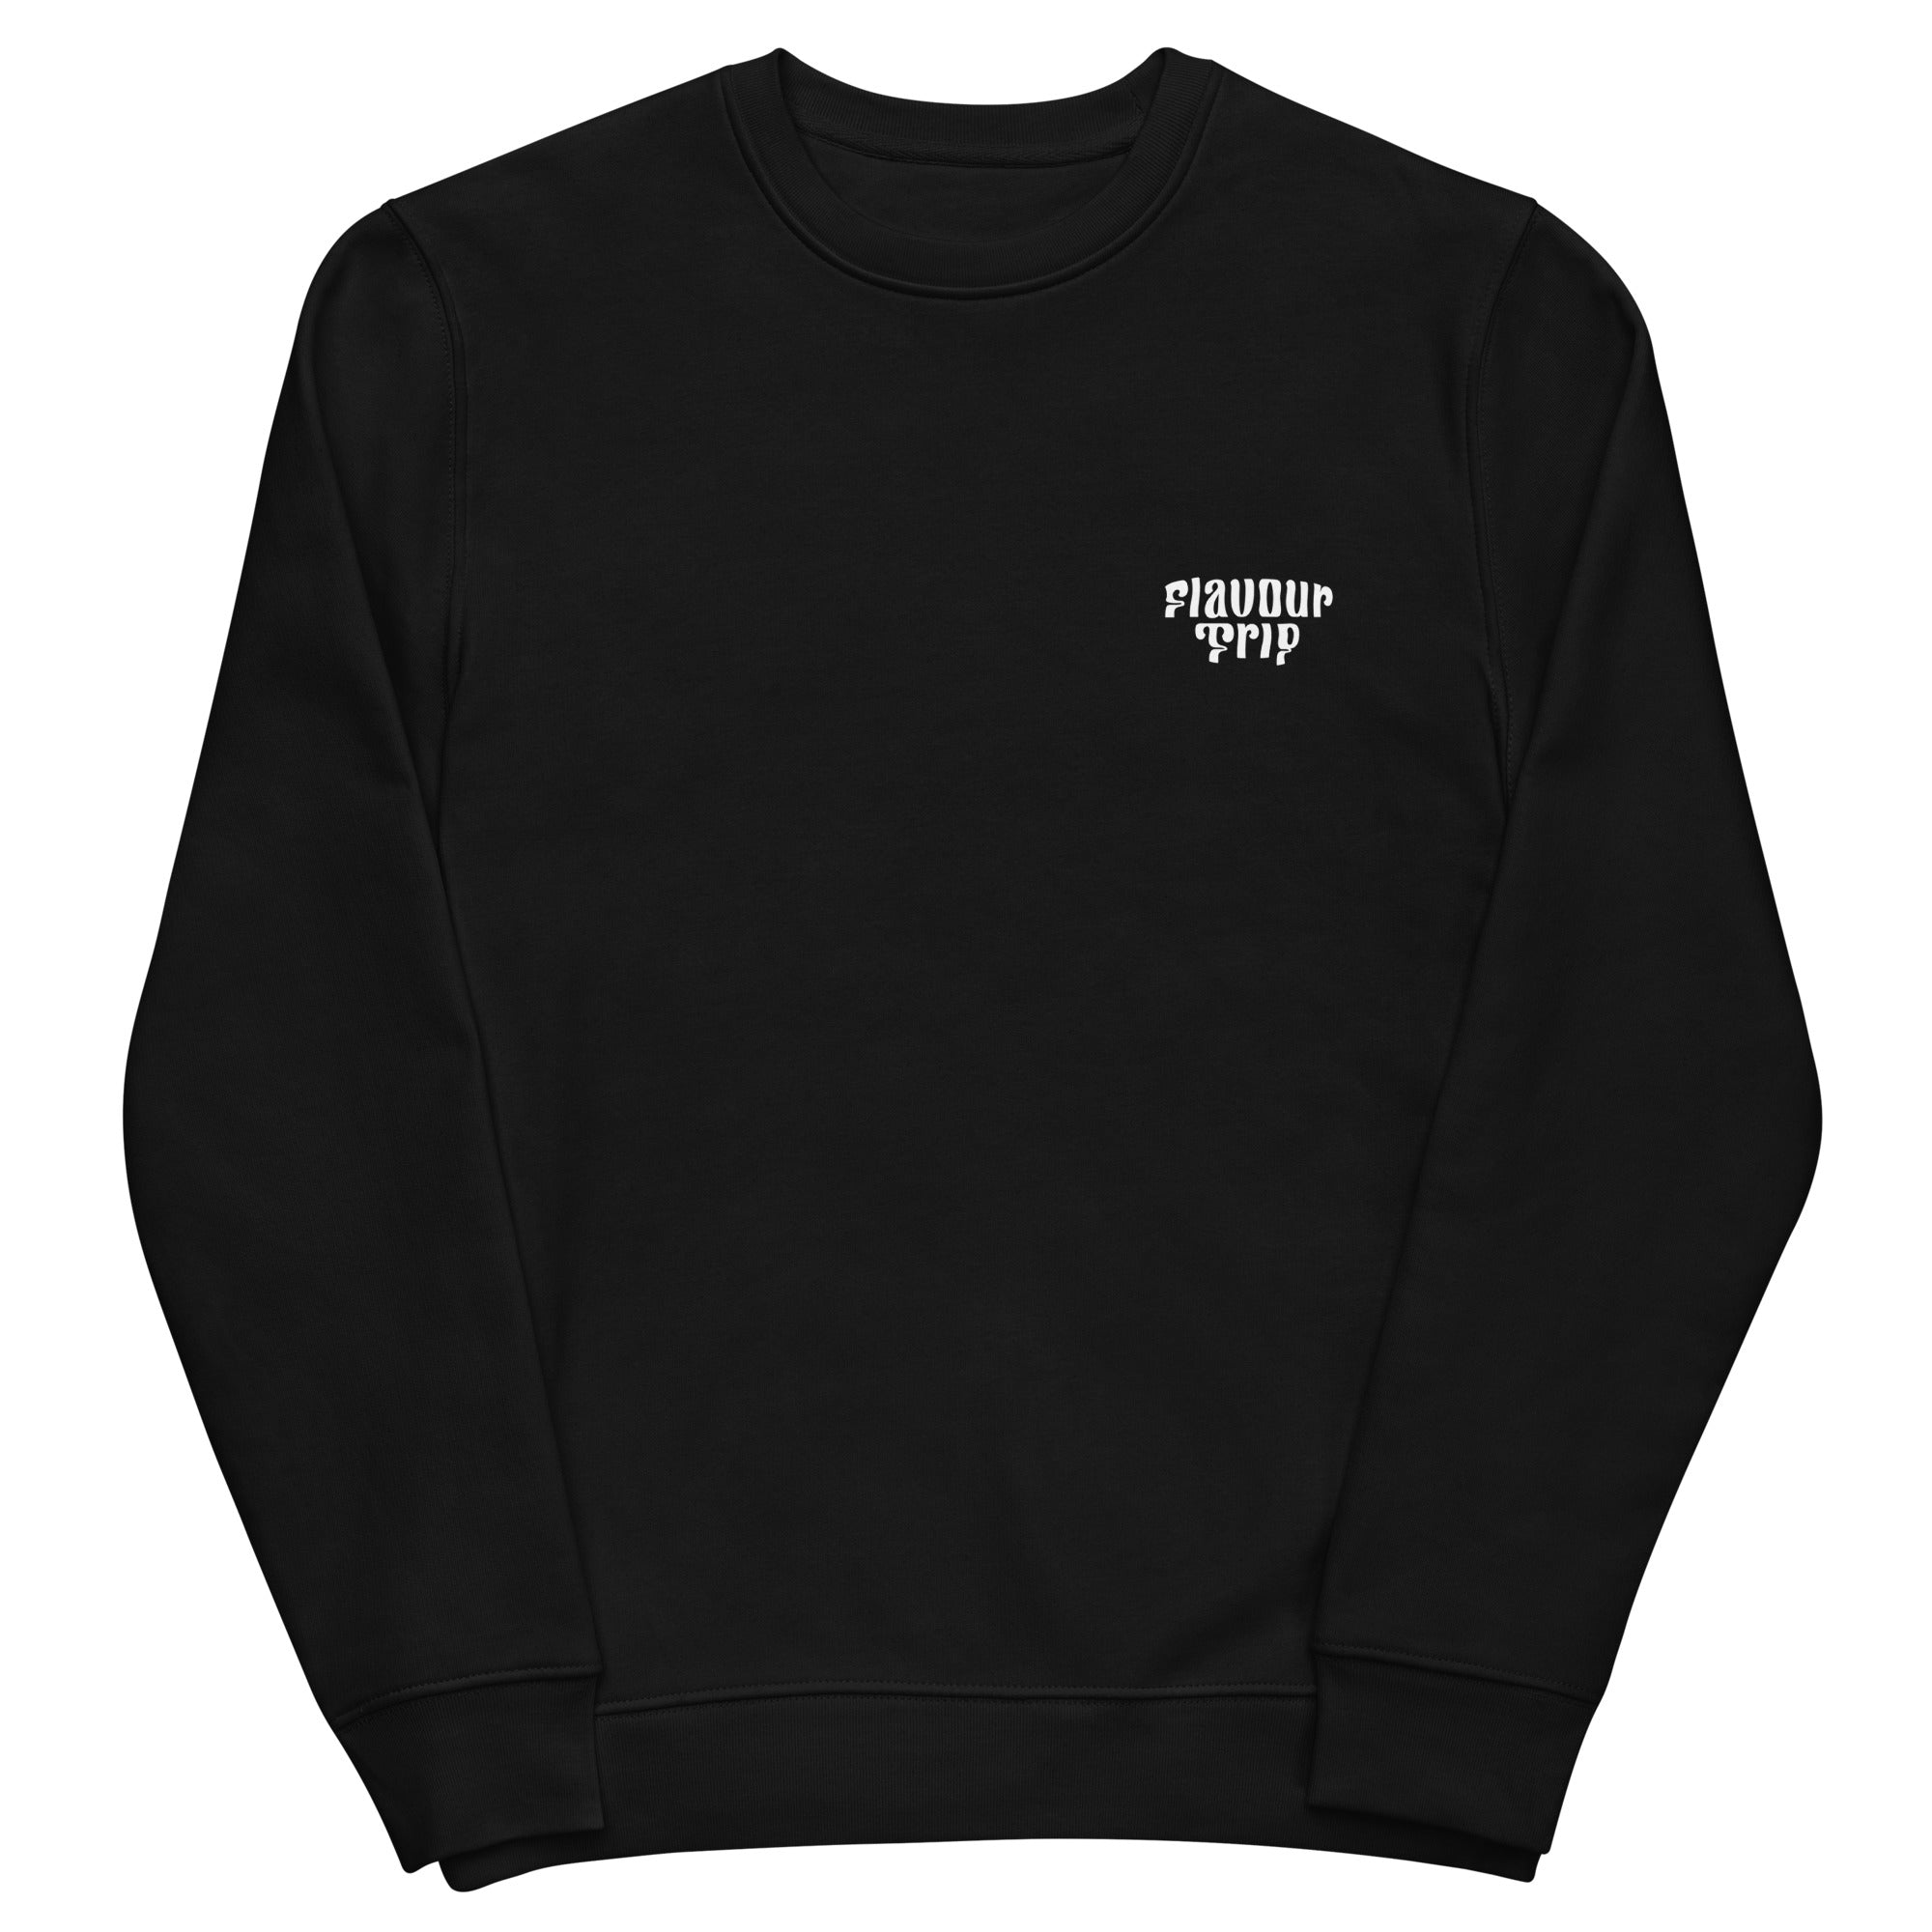 FLAVOUR TROOPER - Black Sweater Unisex